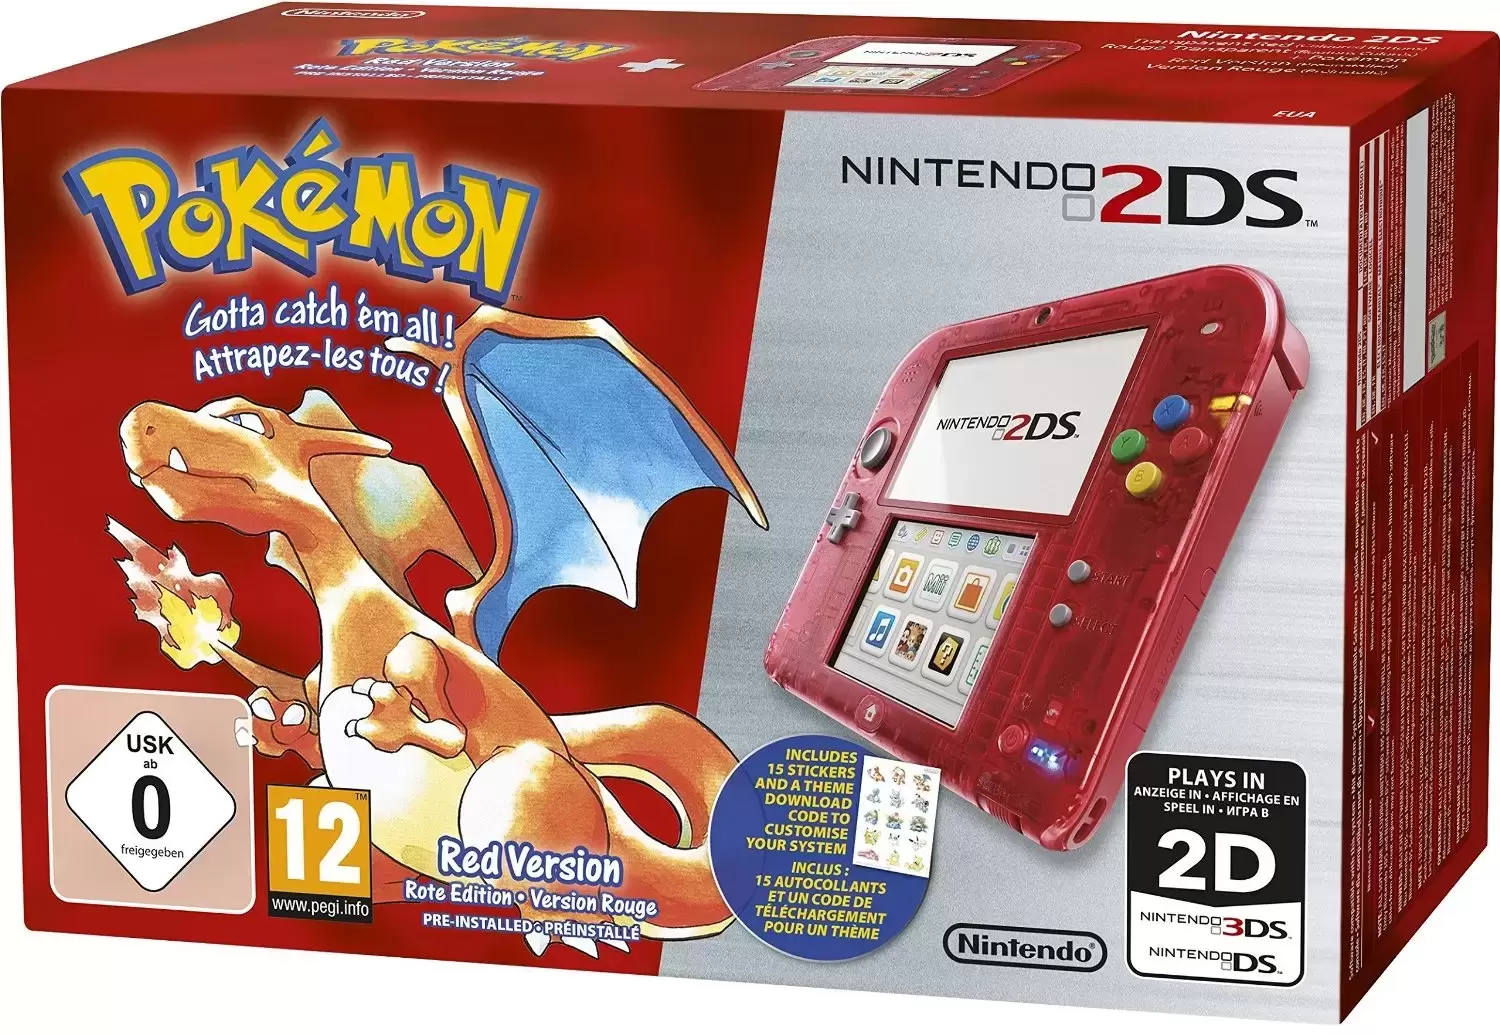 Nintendo 2DS Stuff - Nintendo 2DS Pokémon Version Red - Nintendo 2DS